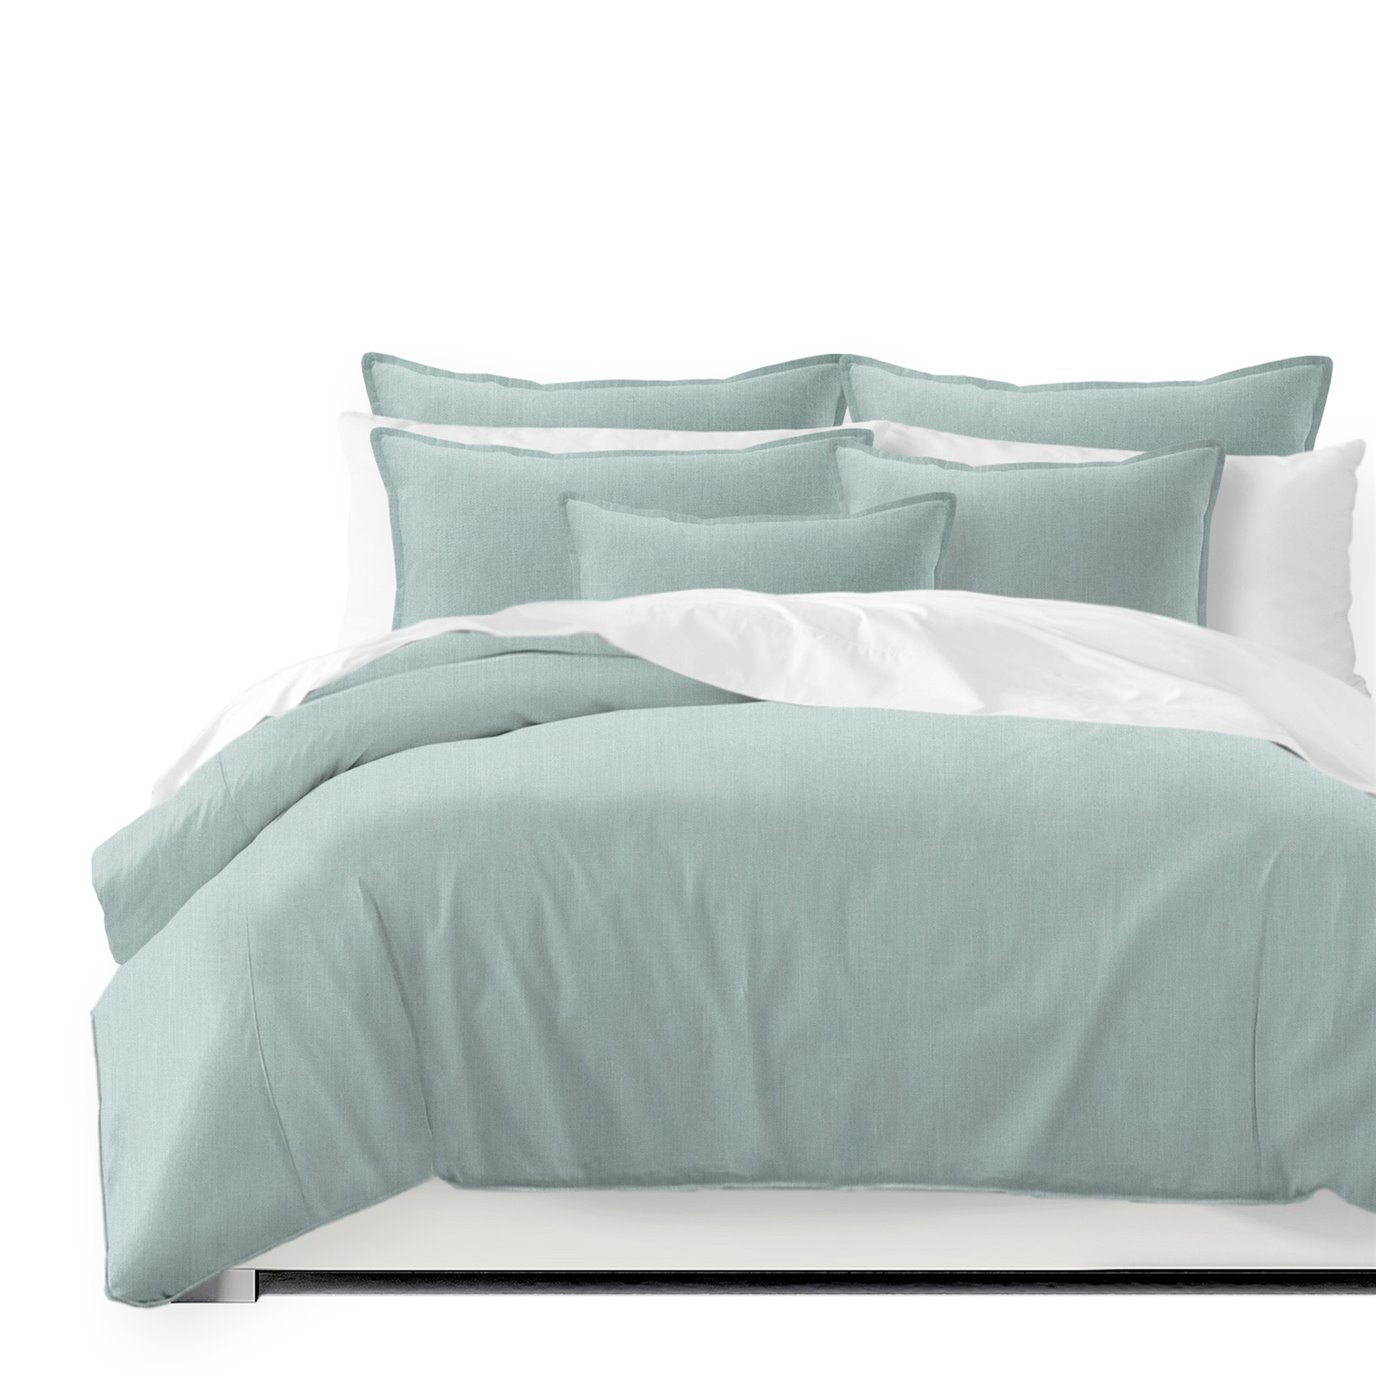 Sutton Aqua Mist Comforter and Pillow Sham(s) Set - Size Queen